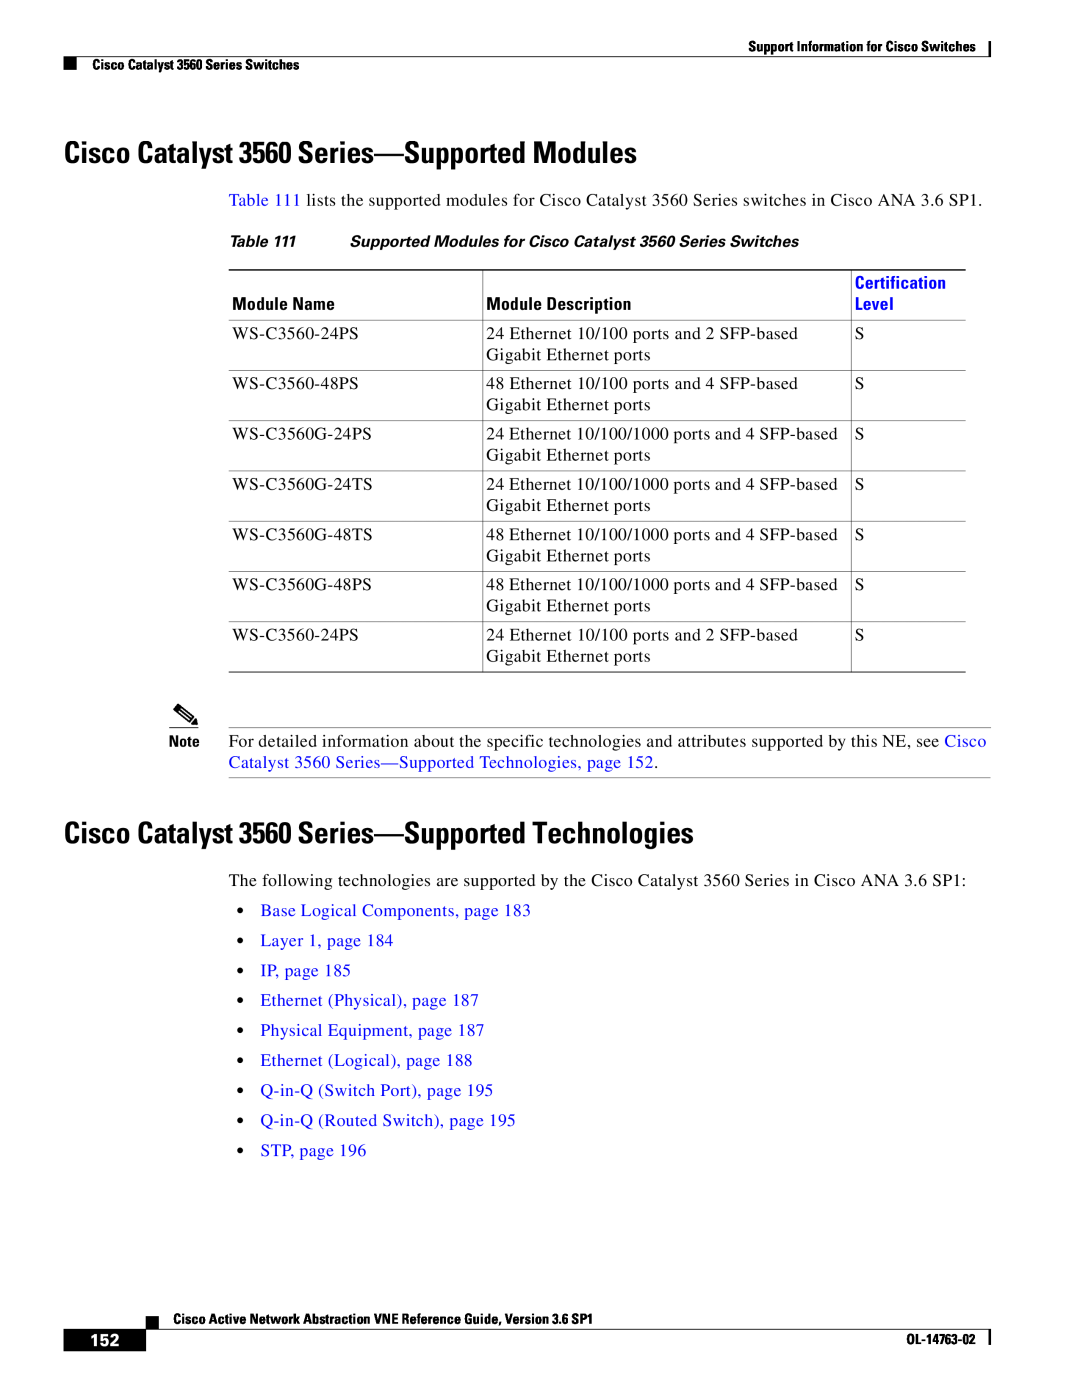 Cisco Systems OL-14763-02 Cisco Catalyst 3560 Series-Supported Modules, Cisco Catalyst 3560 Series-Supported Technologies 